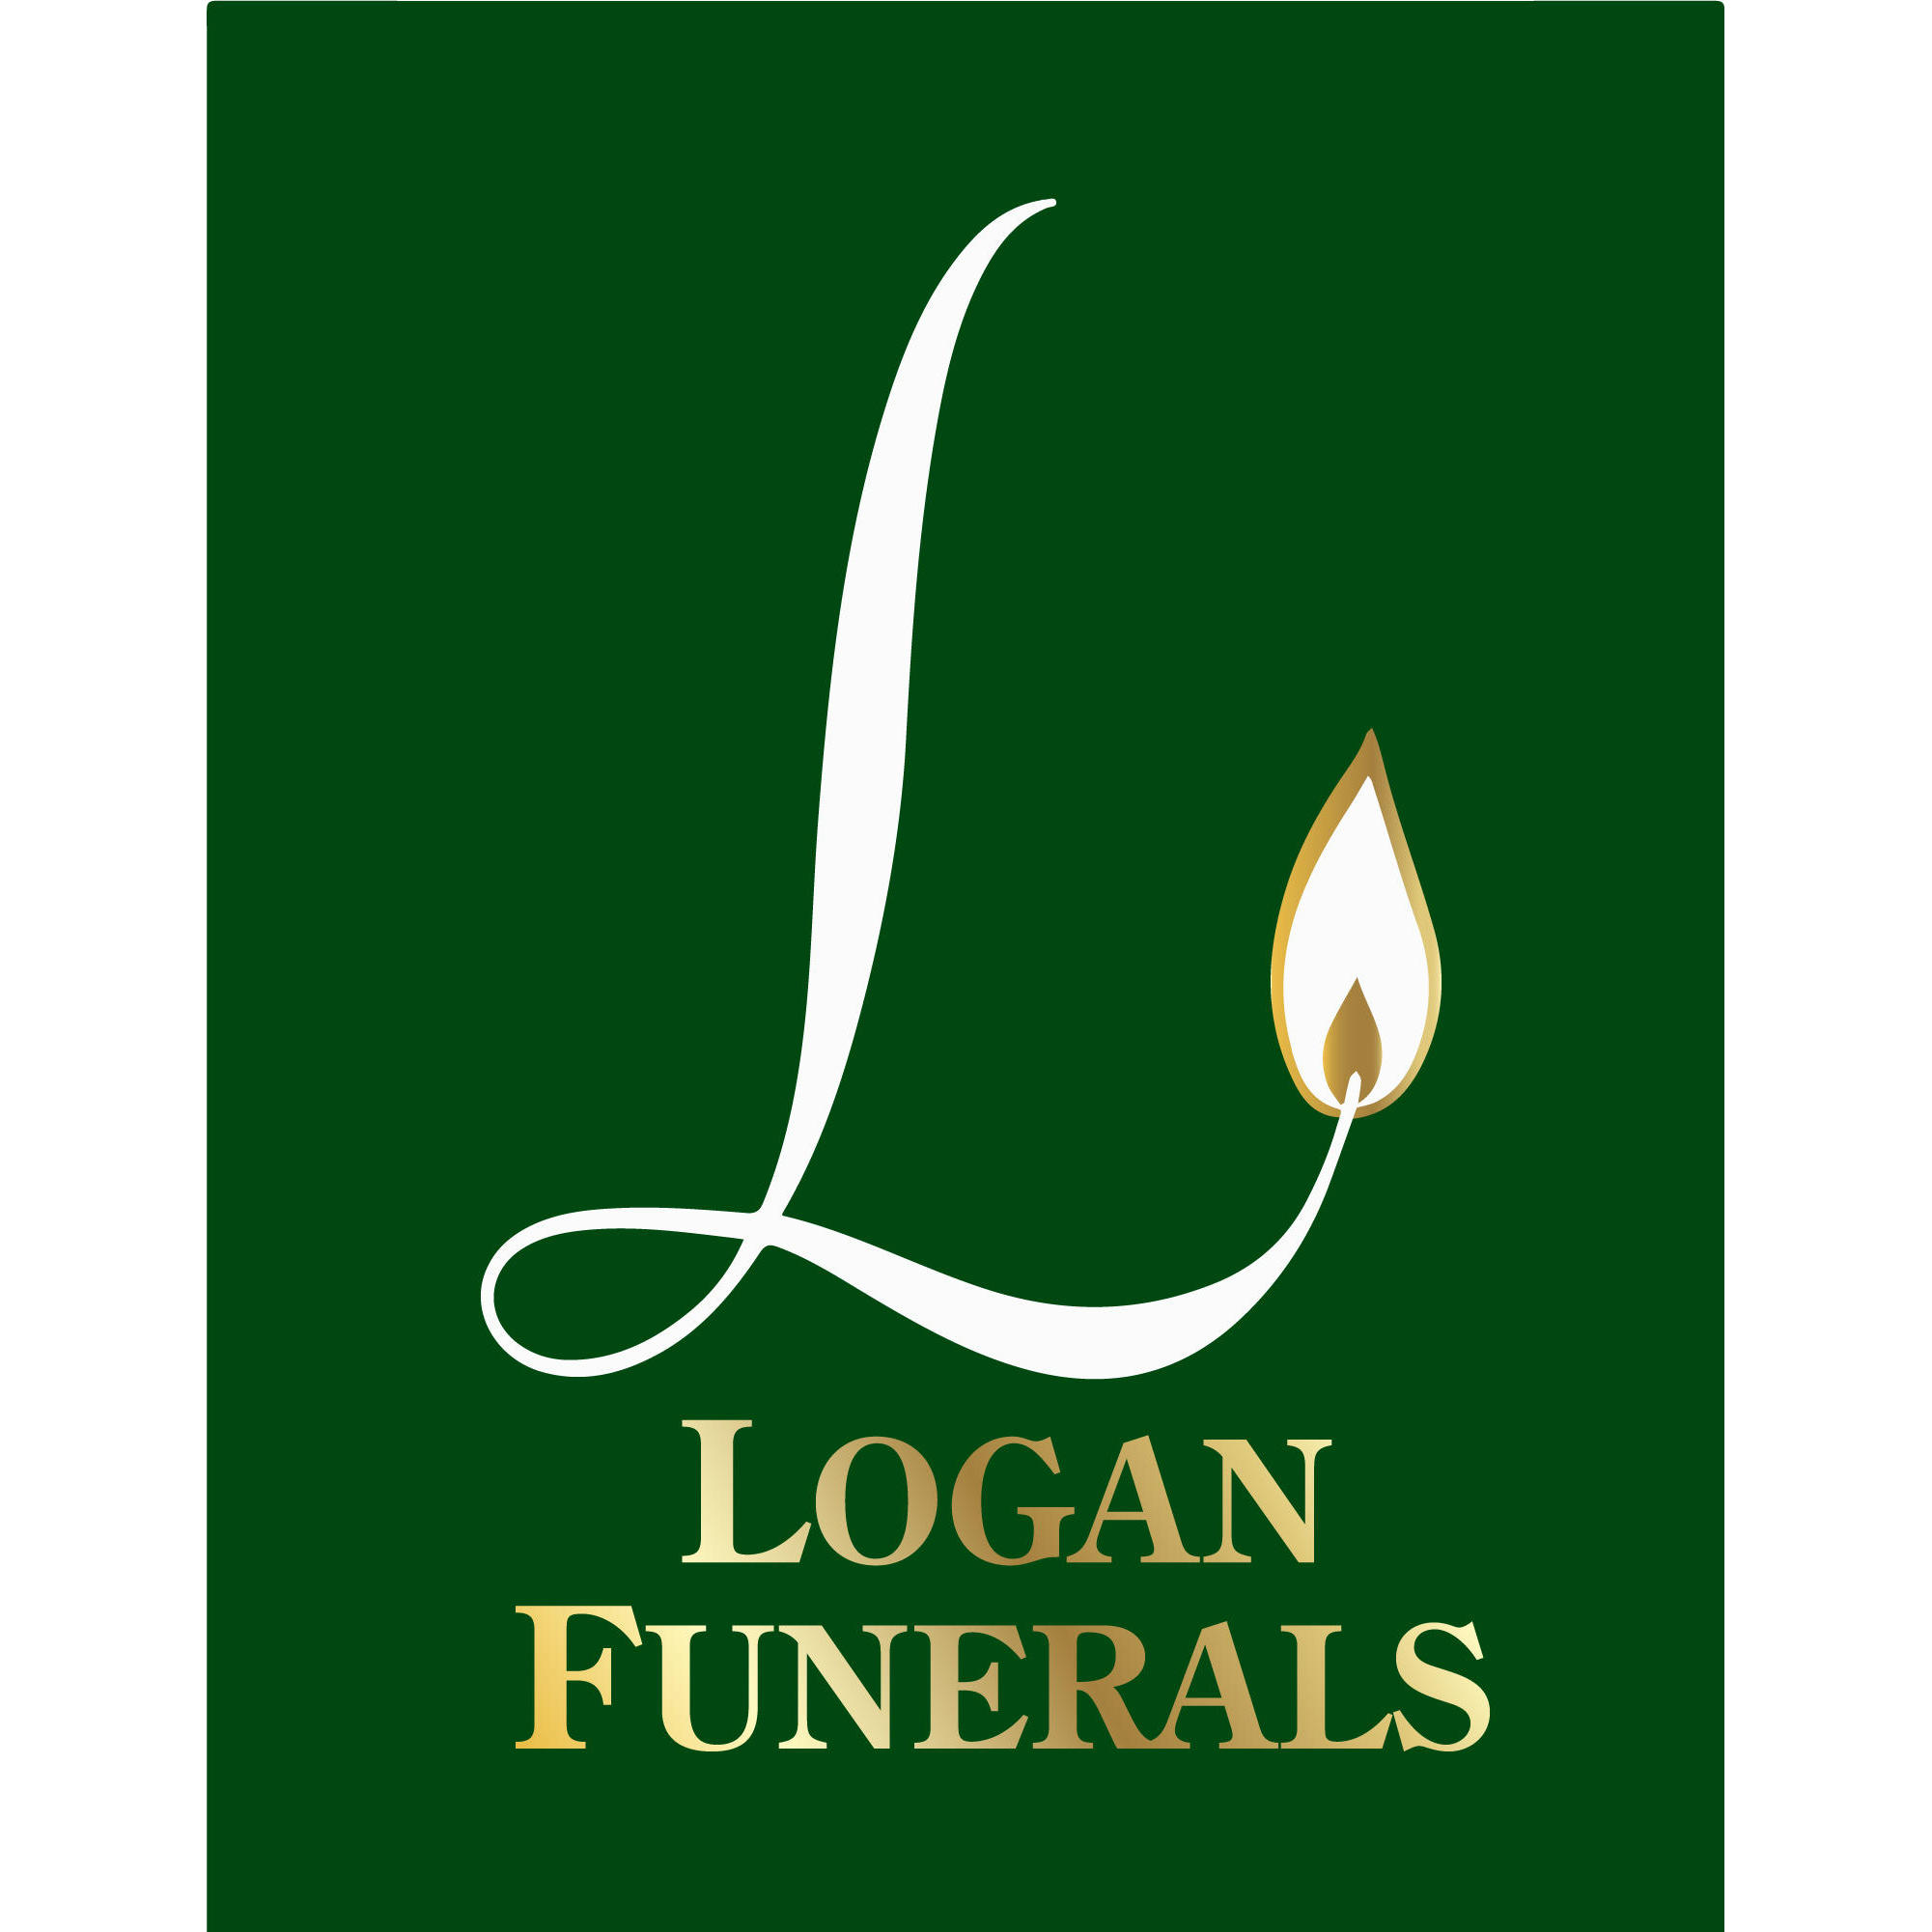 Logan Funerals - Moree, NSW 2400 - (02) 6752 2177 | ShowMeLocal.com